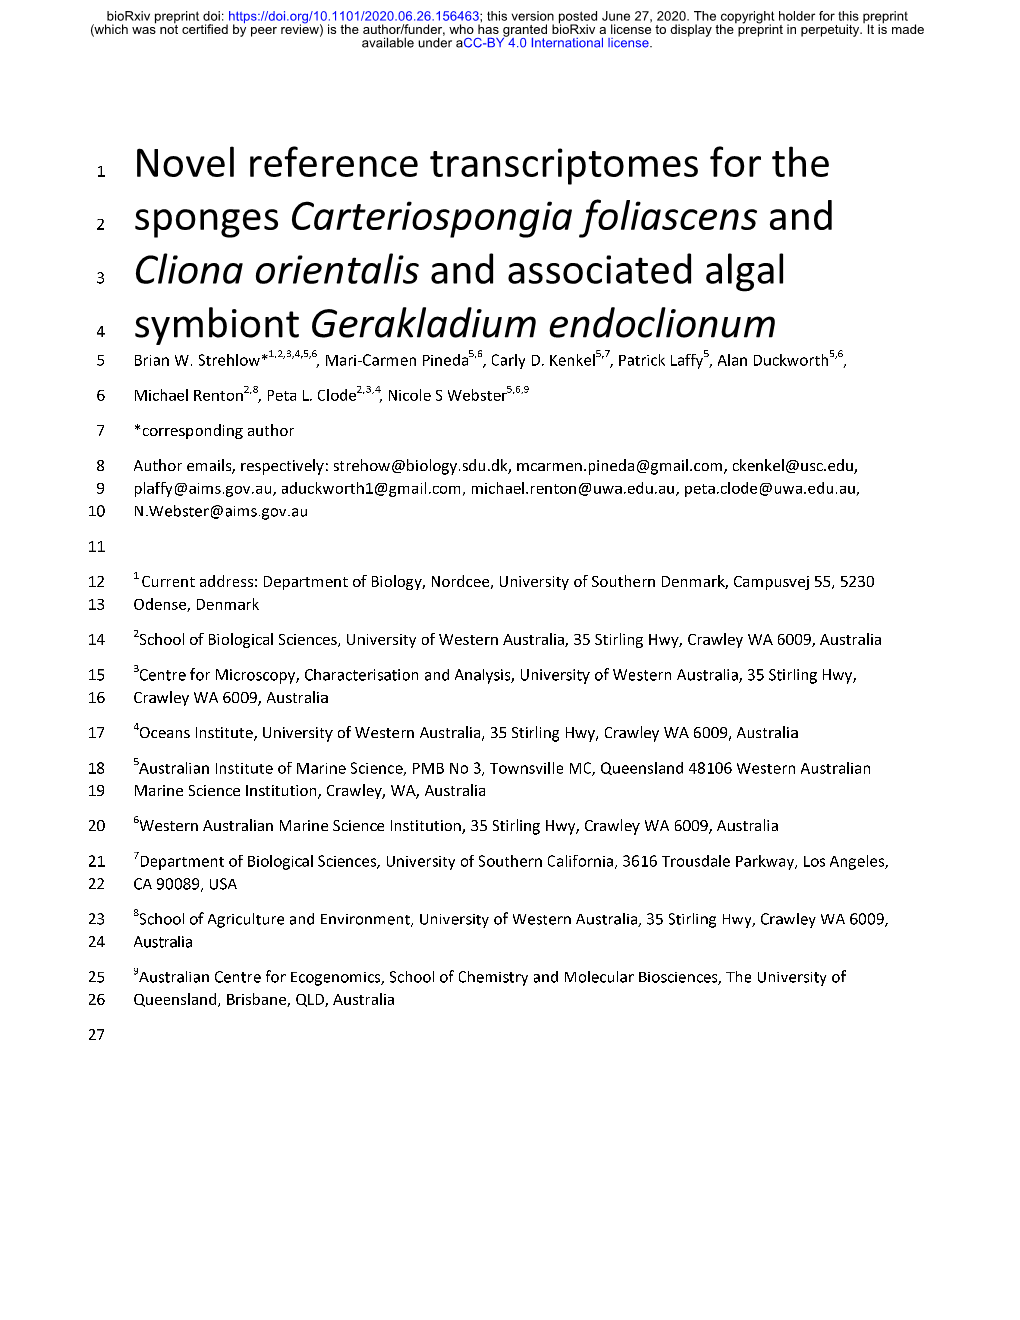 Novel Reference Transcriptomes for the Sponges Carteriospongia